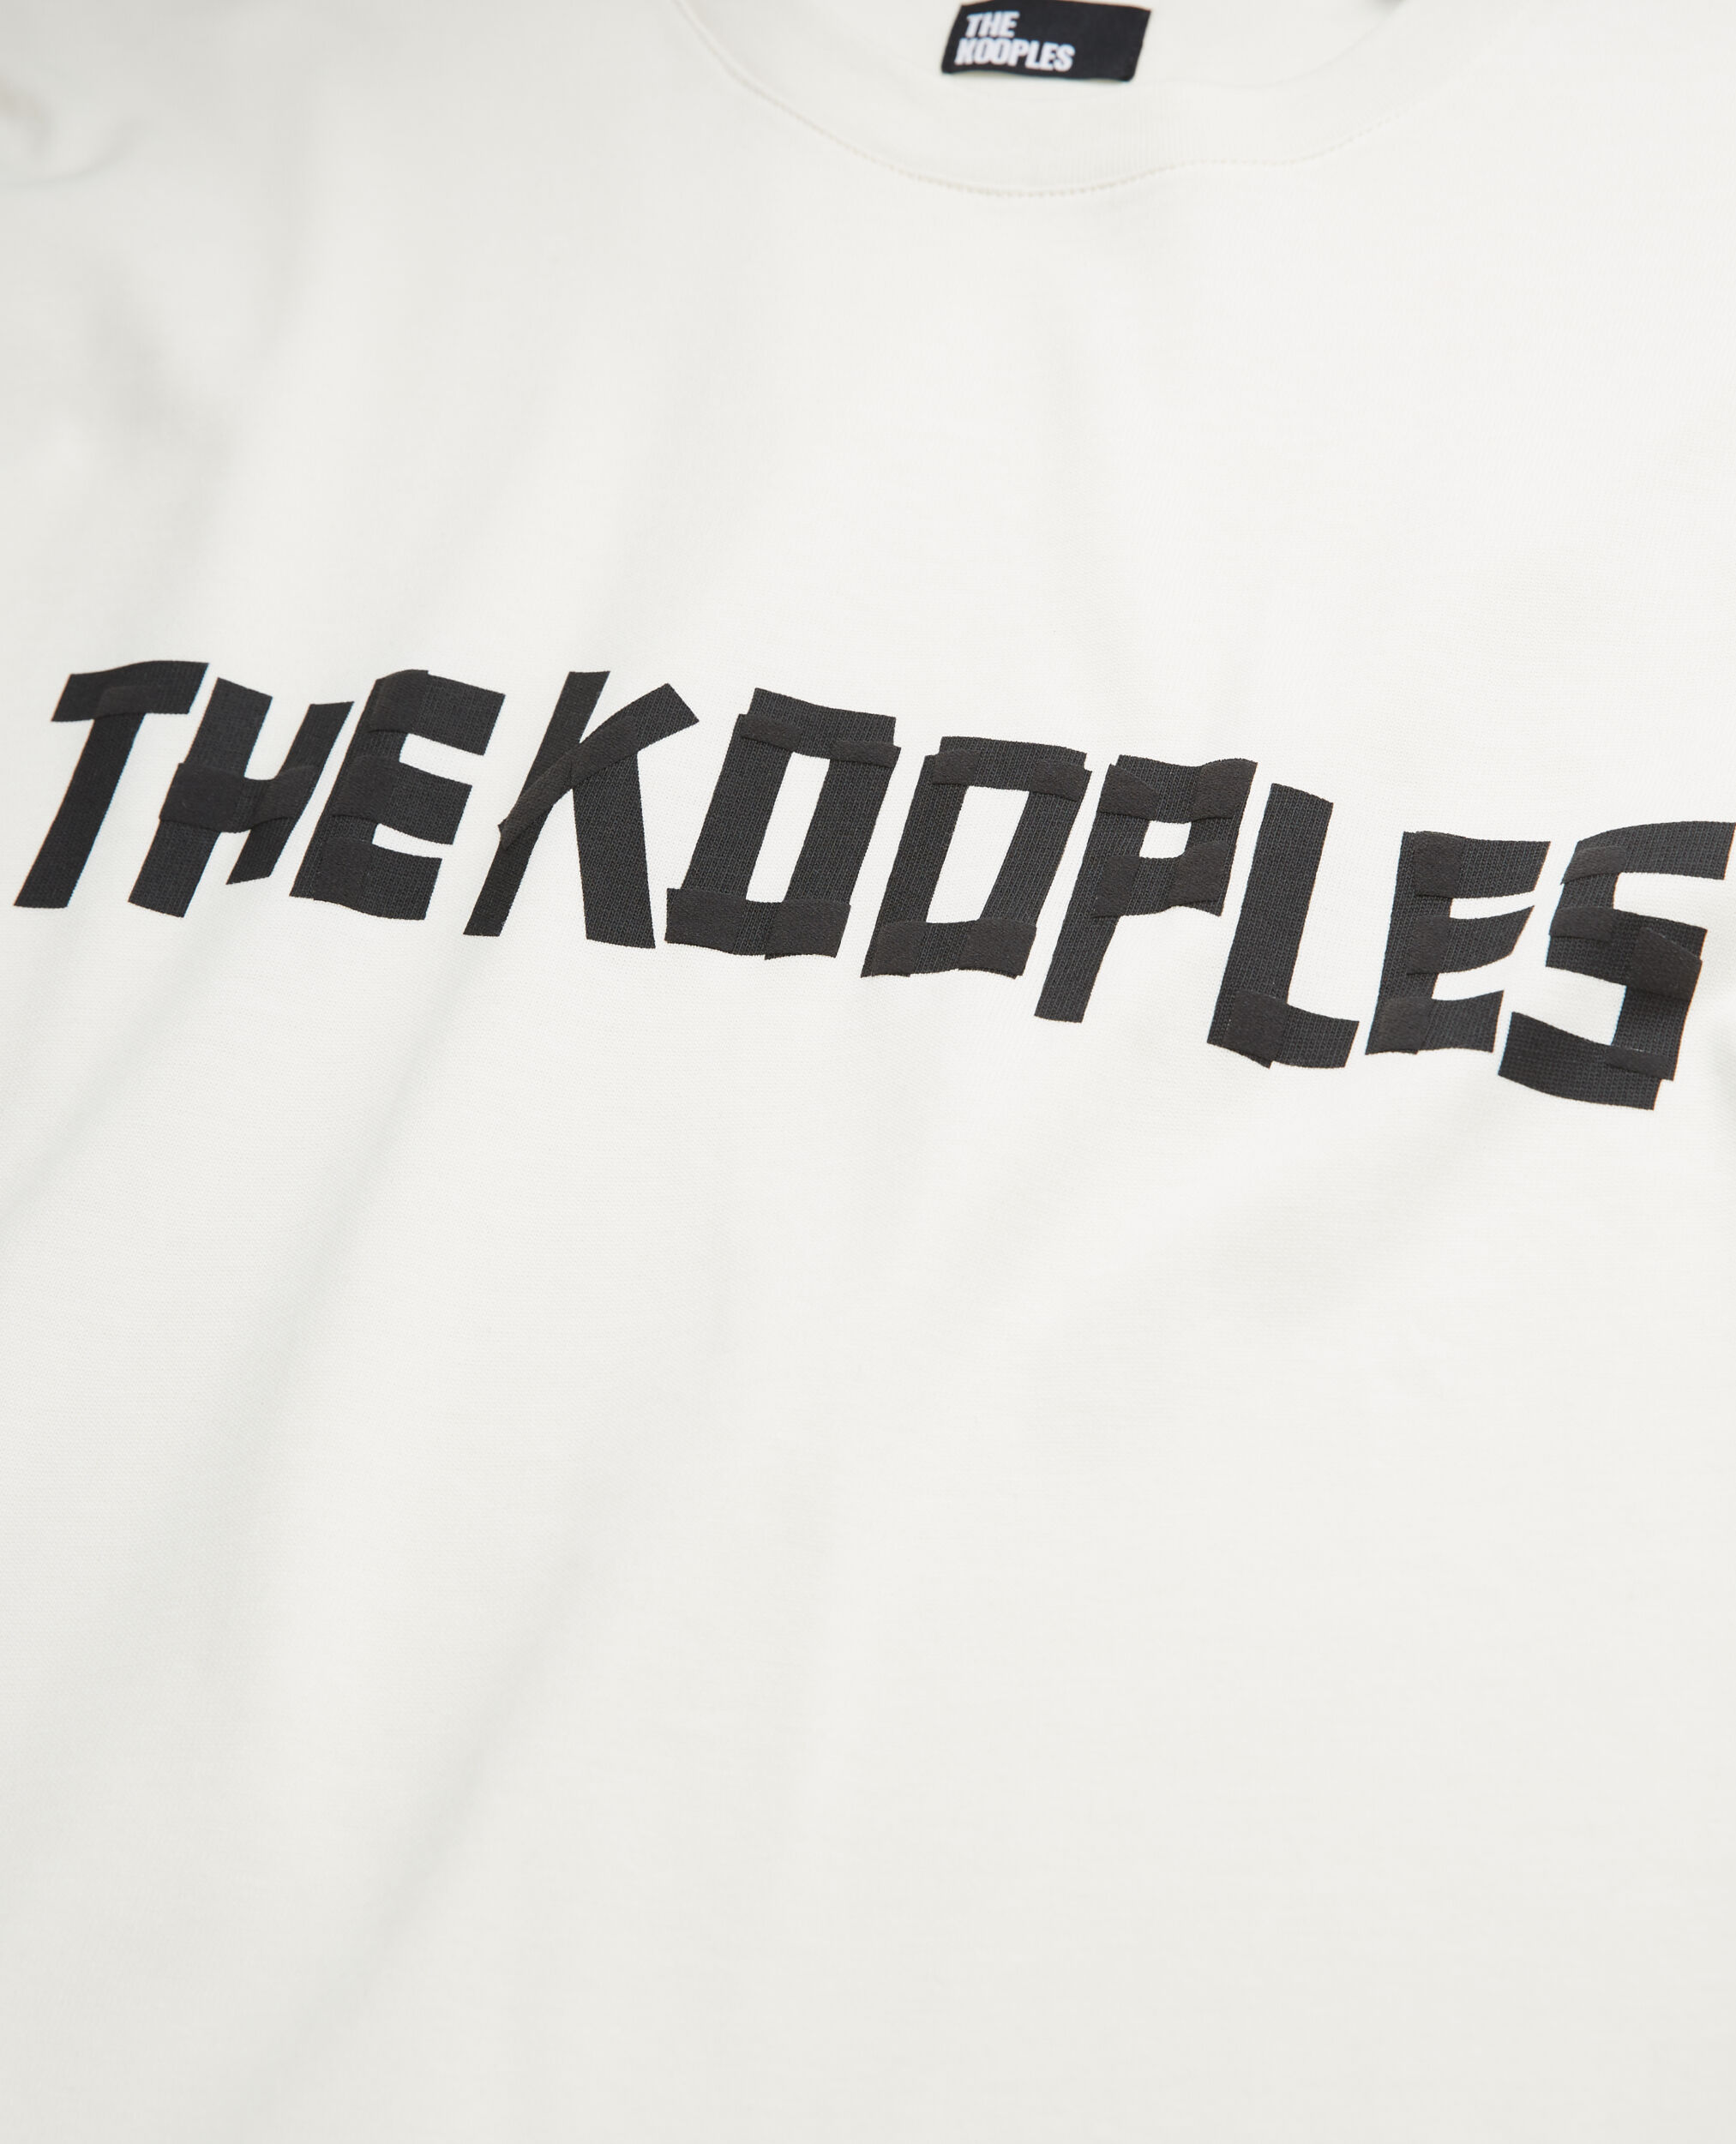 Weißes T-Shirt Herren mit The Kooples Logo, WHITE, hi-res image number null